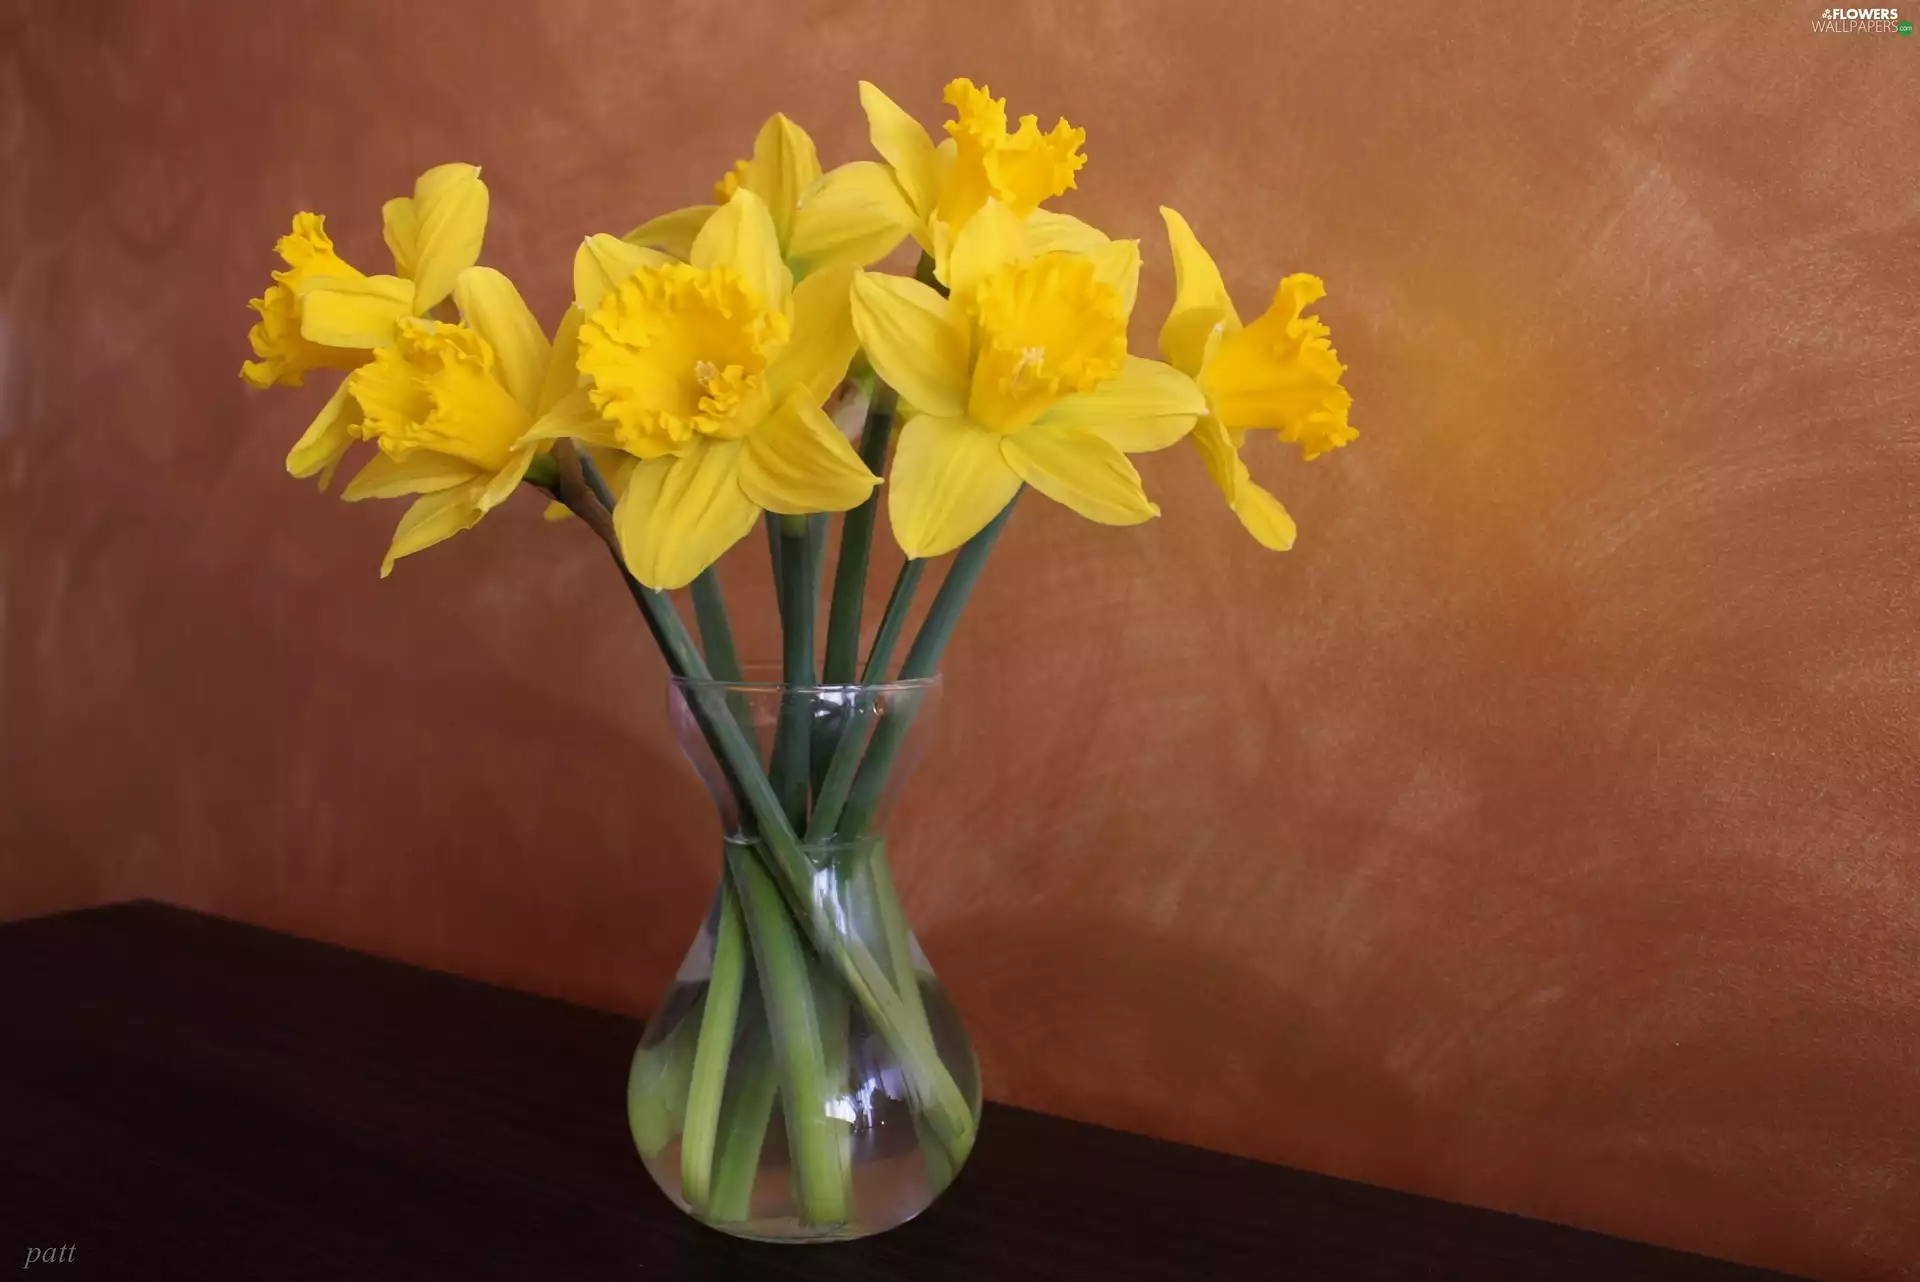 Daffodils, bouquet